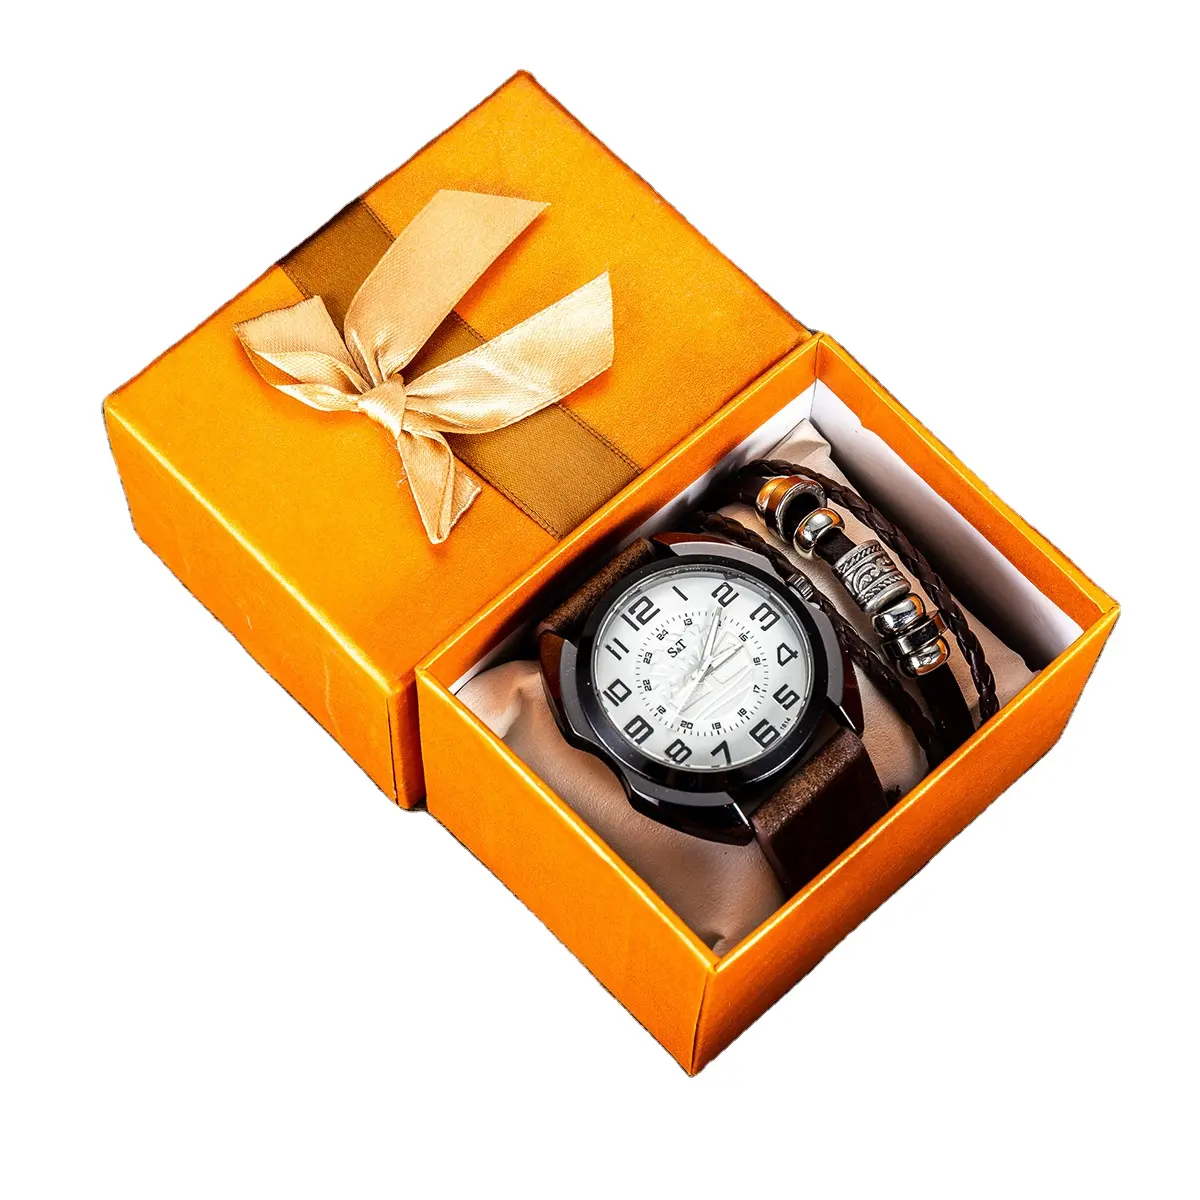 Wholesale promotion customized men's fashion business belt quartz watch + bracelet set for Christmas Valentine's Day gifts